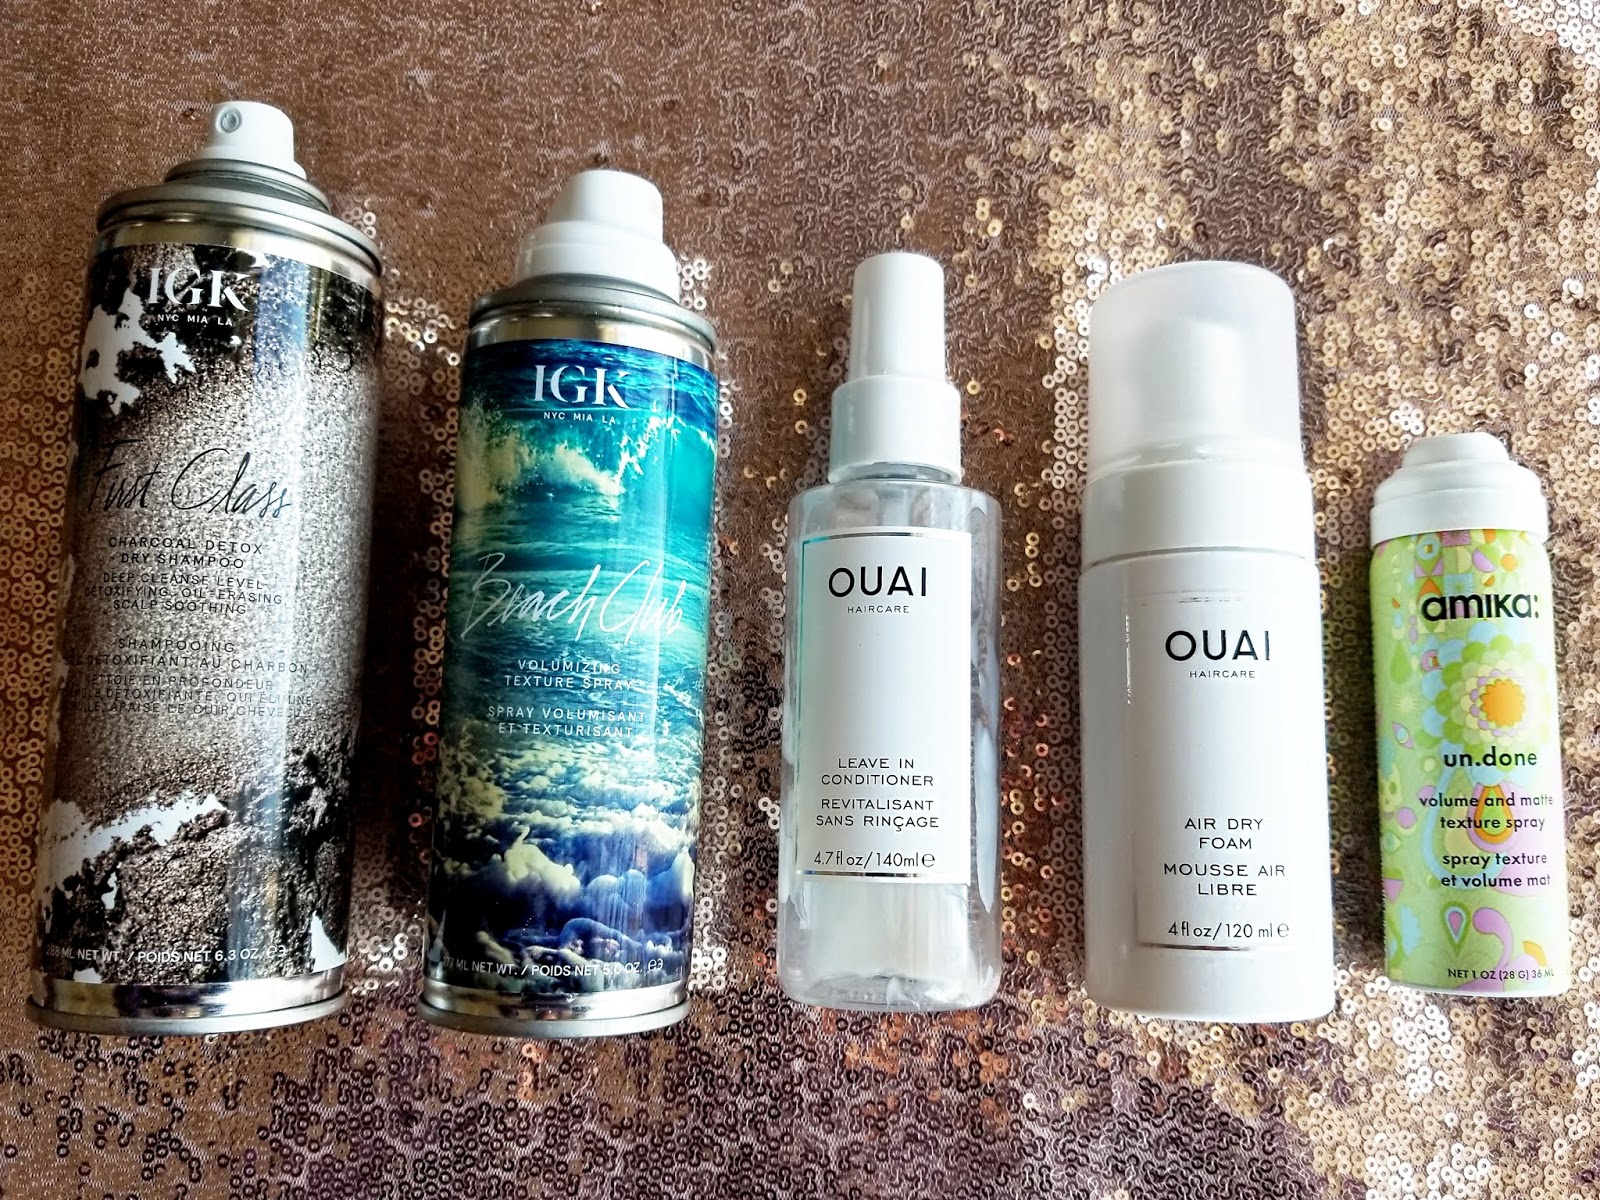 Beach Club Texture Spray - IGK